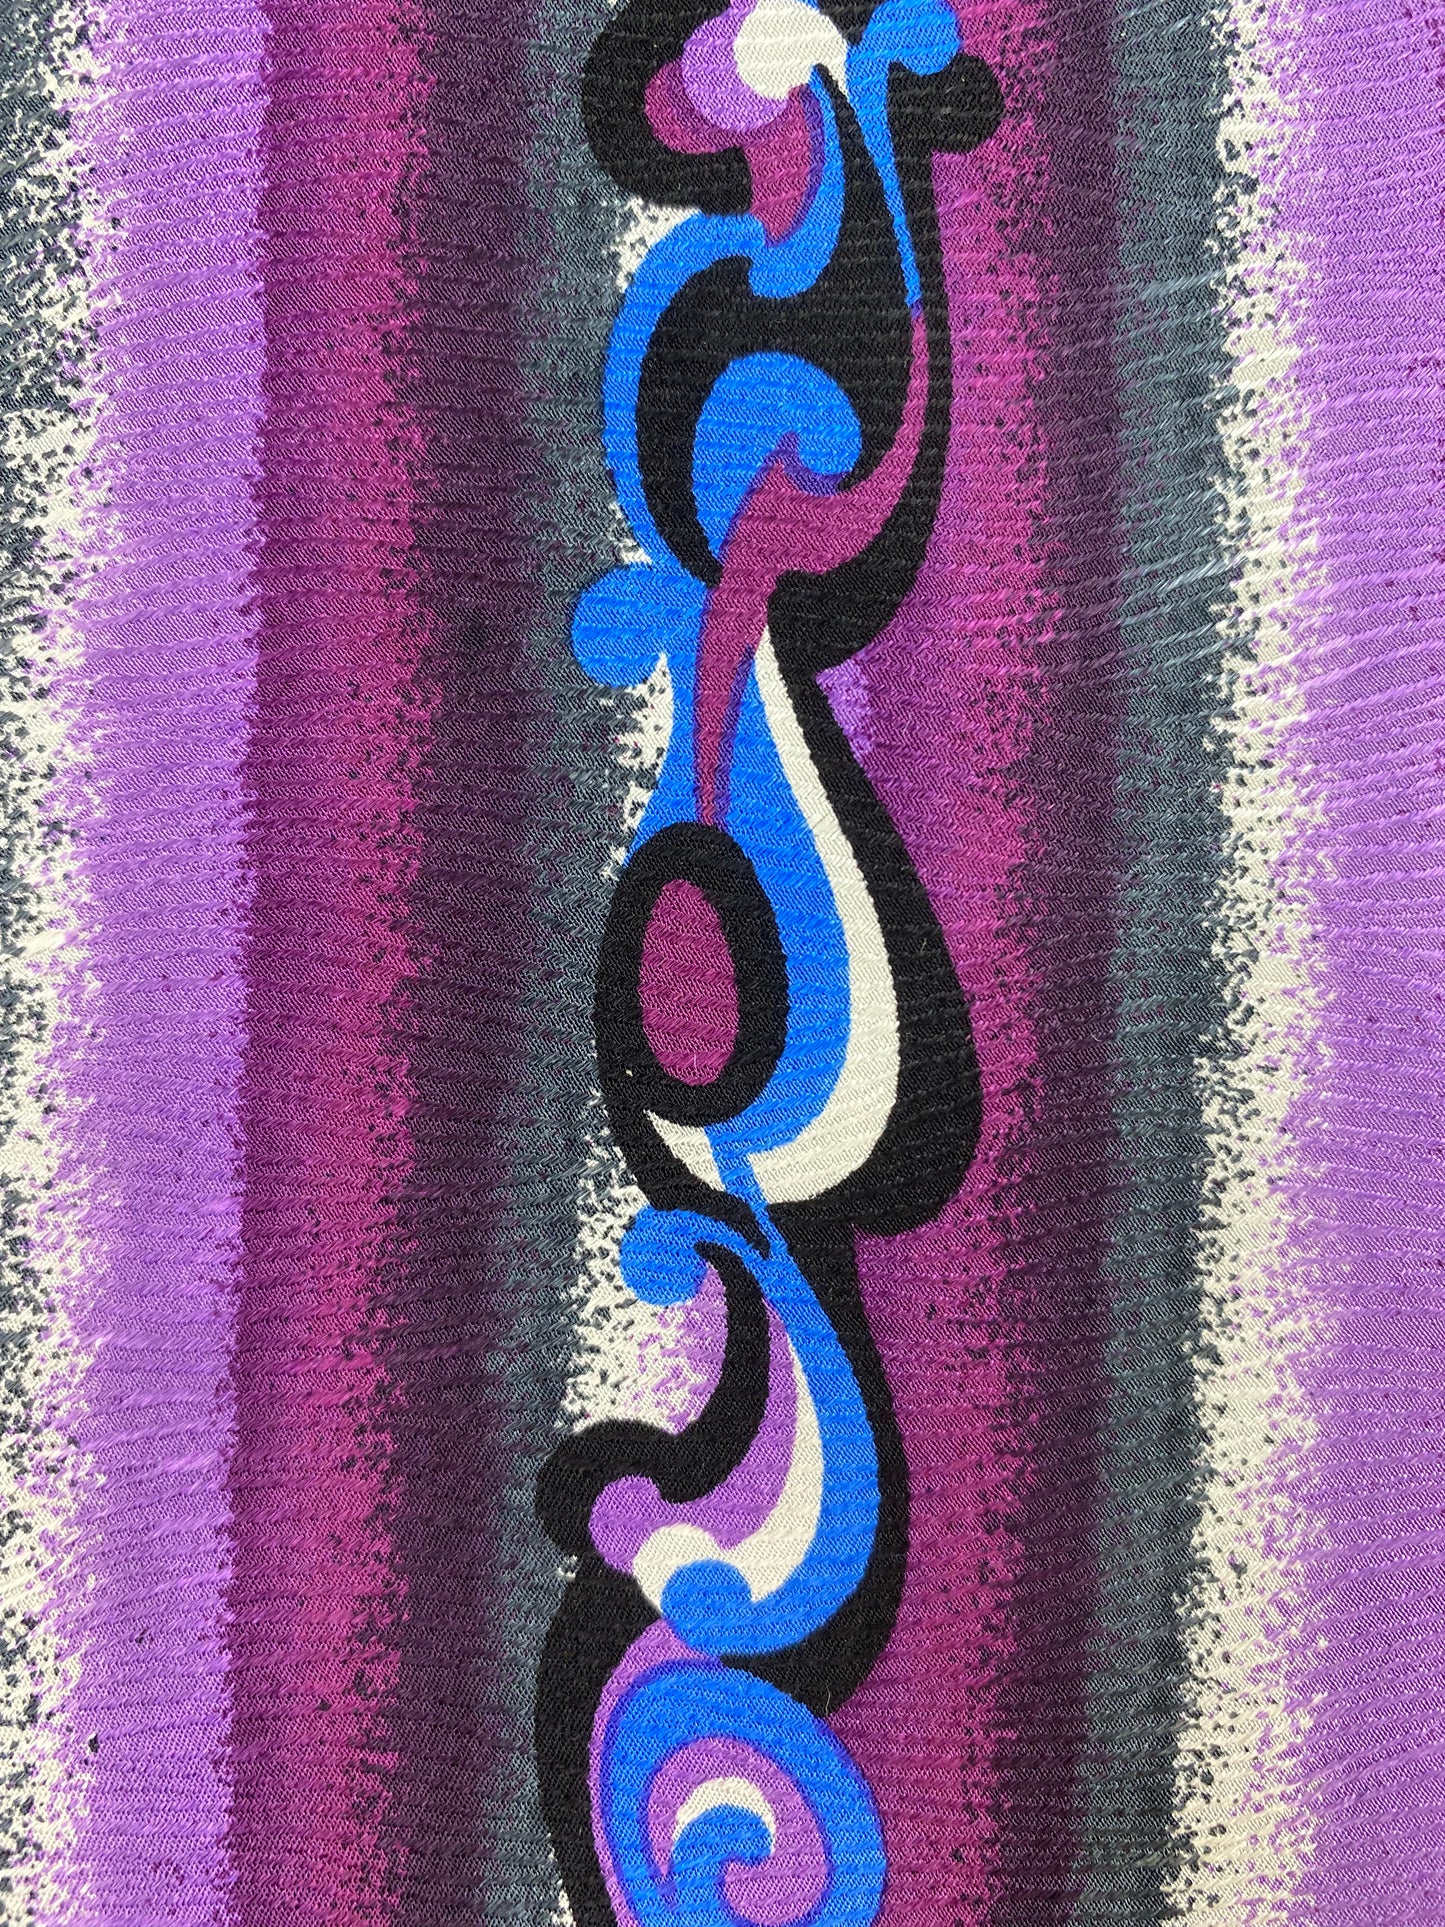 90s Deadstock Silk Necktie, Men's Vintage Purple/ Blue/ Grey Vertical Stripe Abstract Pattern Tie, NOS